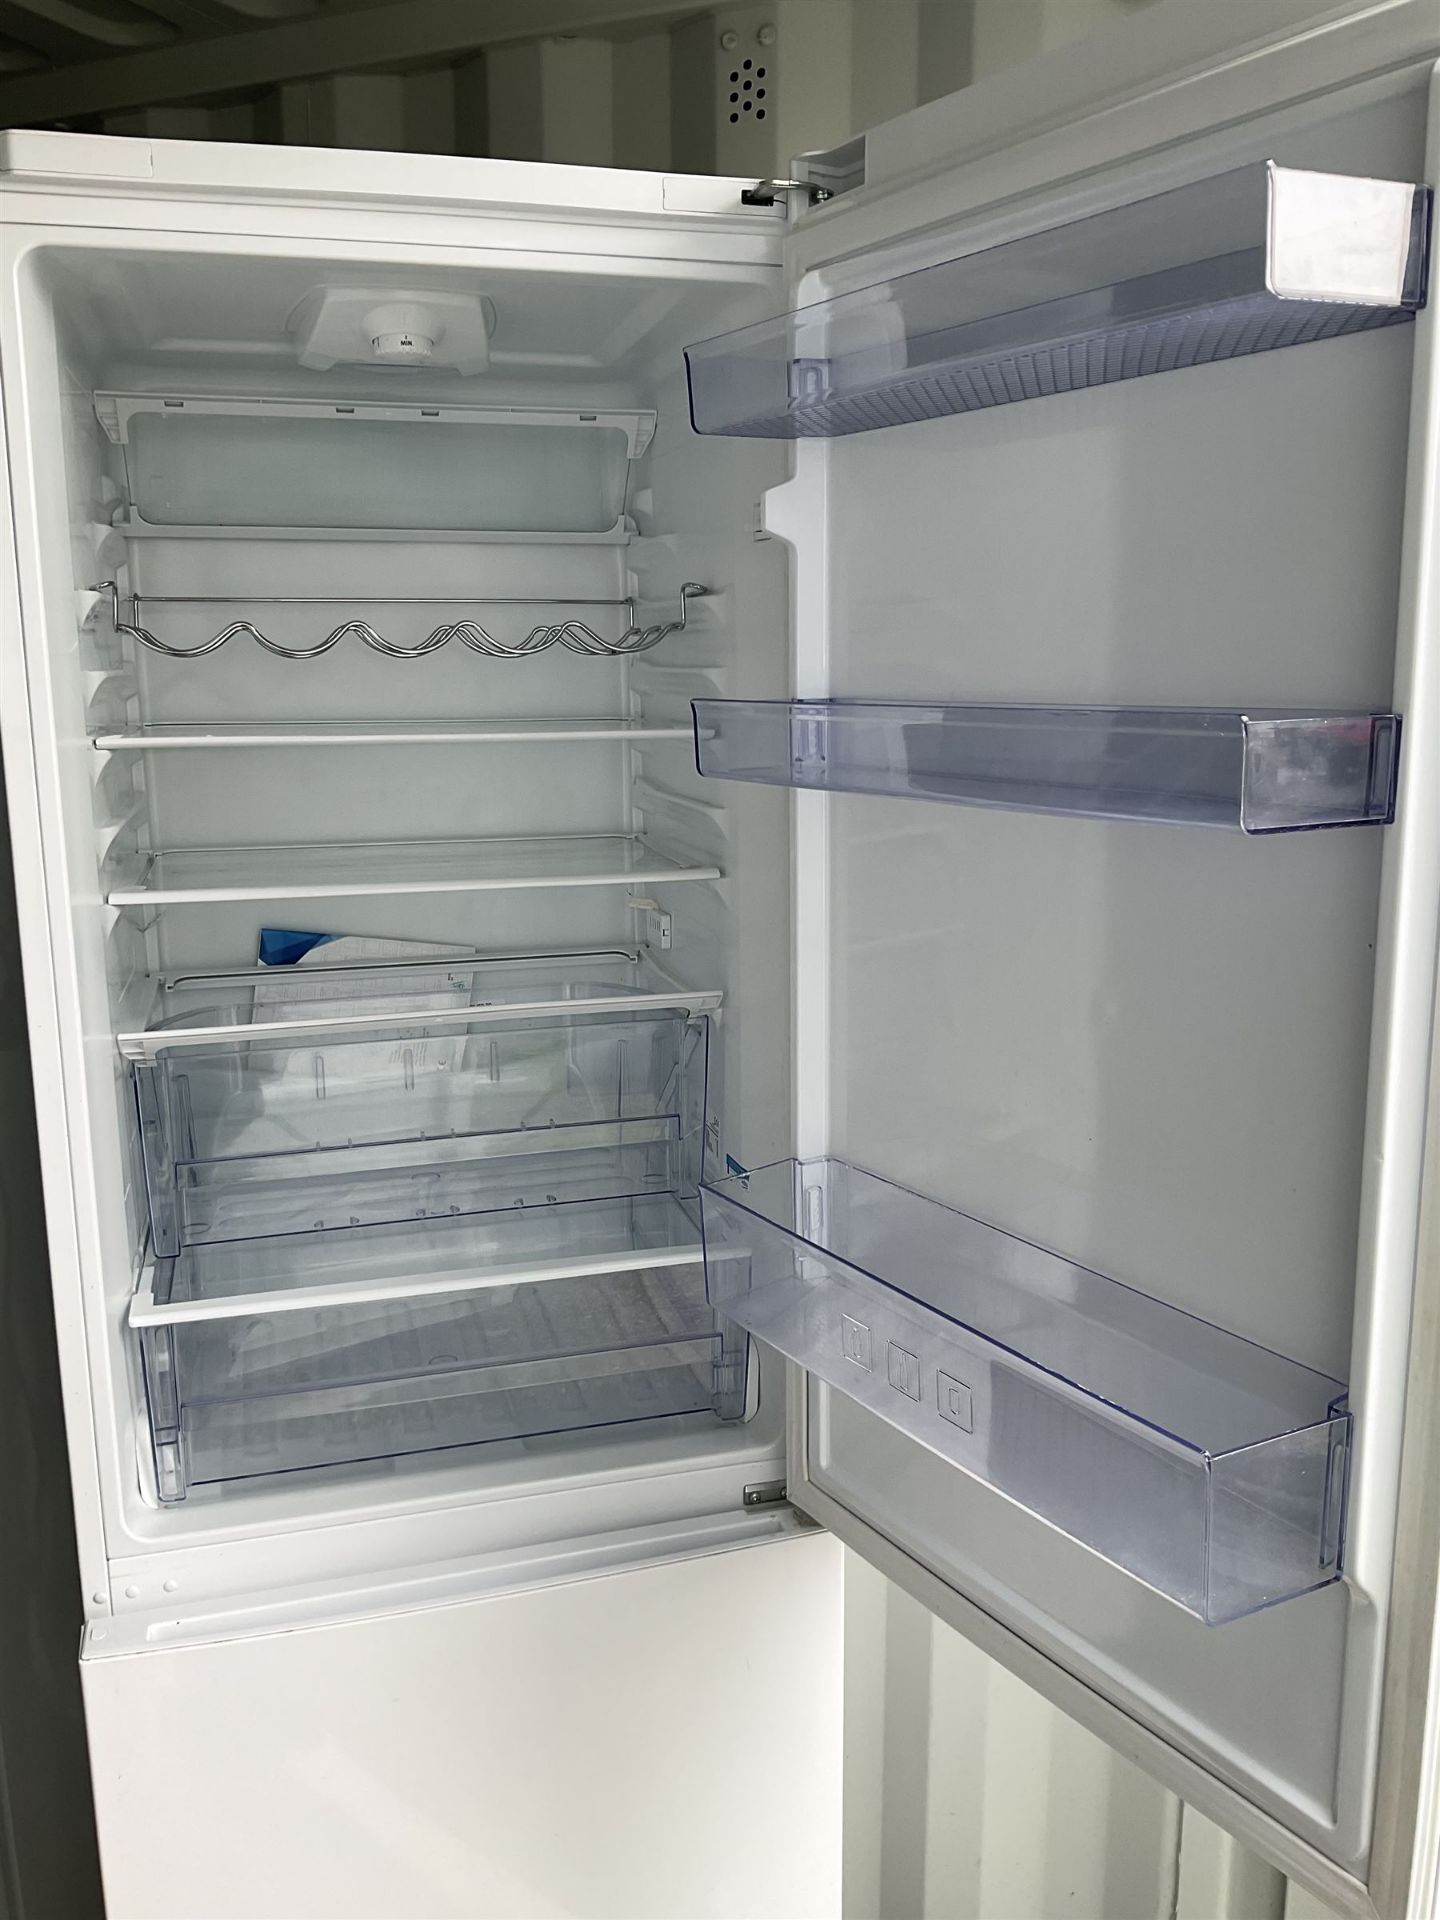 Beko fridge freezer CXFG1601W - Image 2 of 3